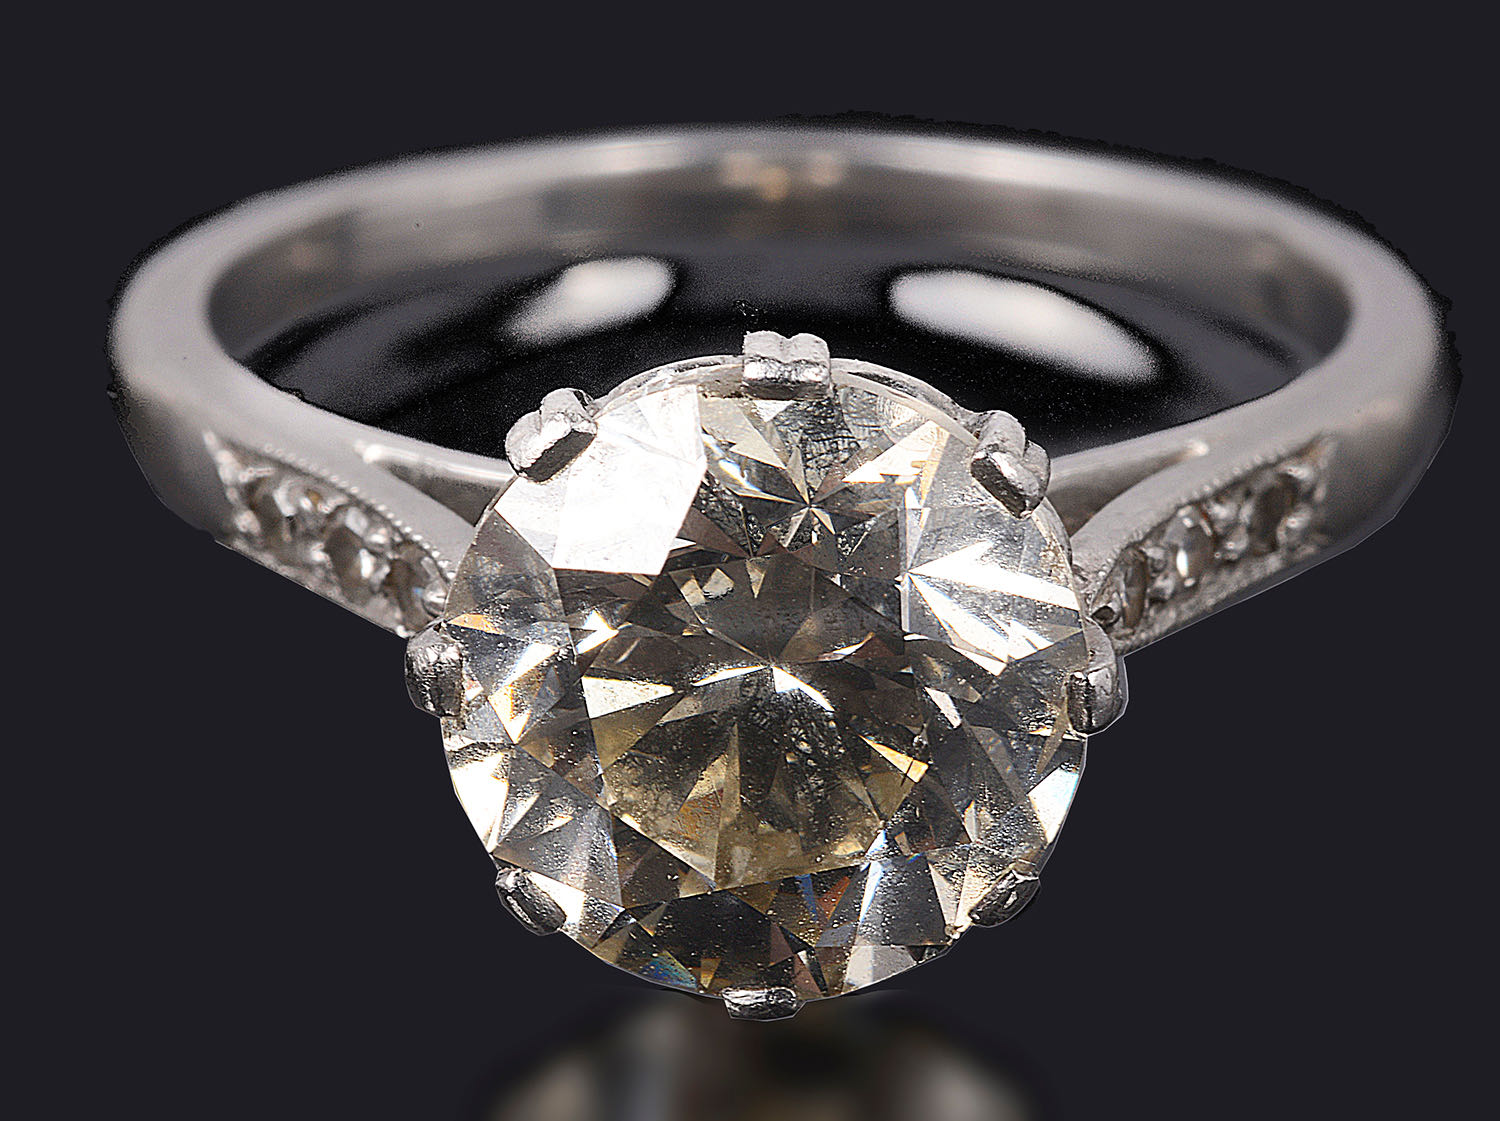 A single stone diamond set ring, approximately 2.43 carats